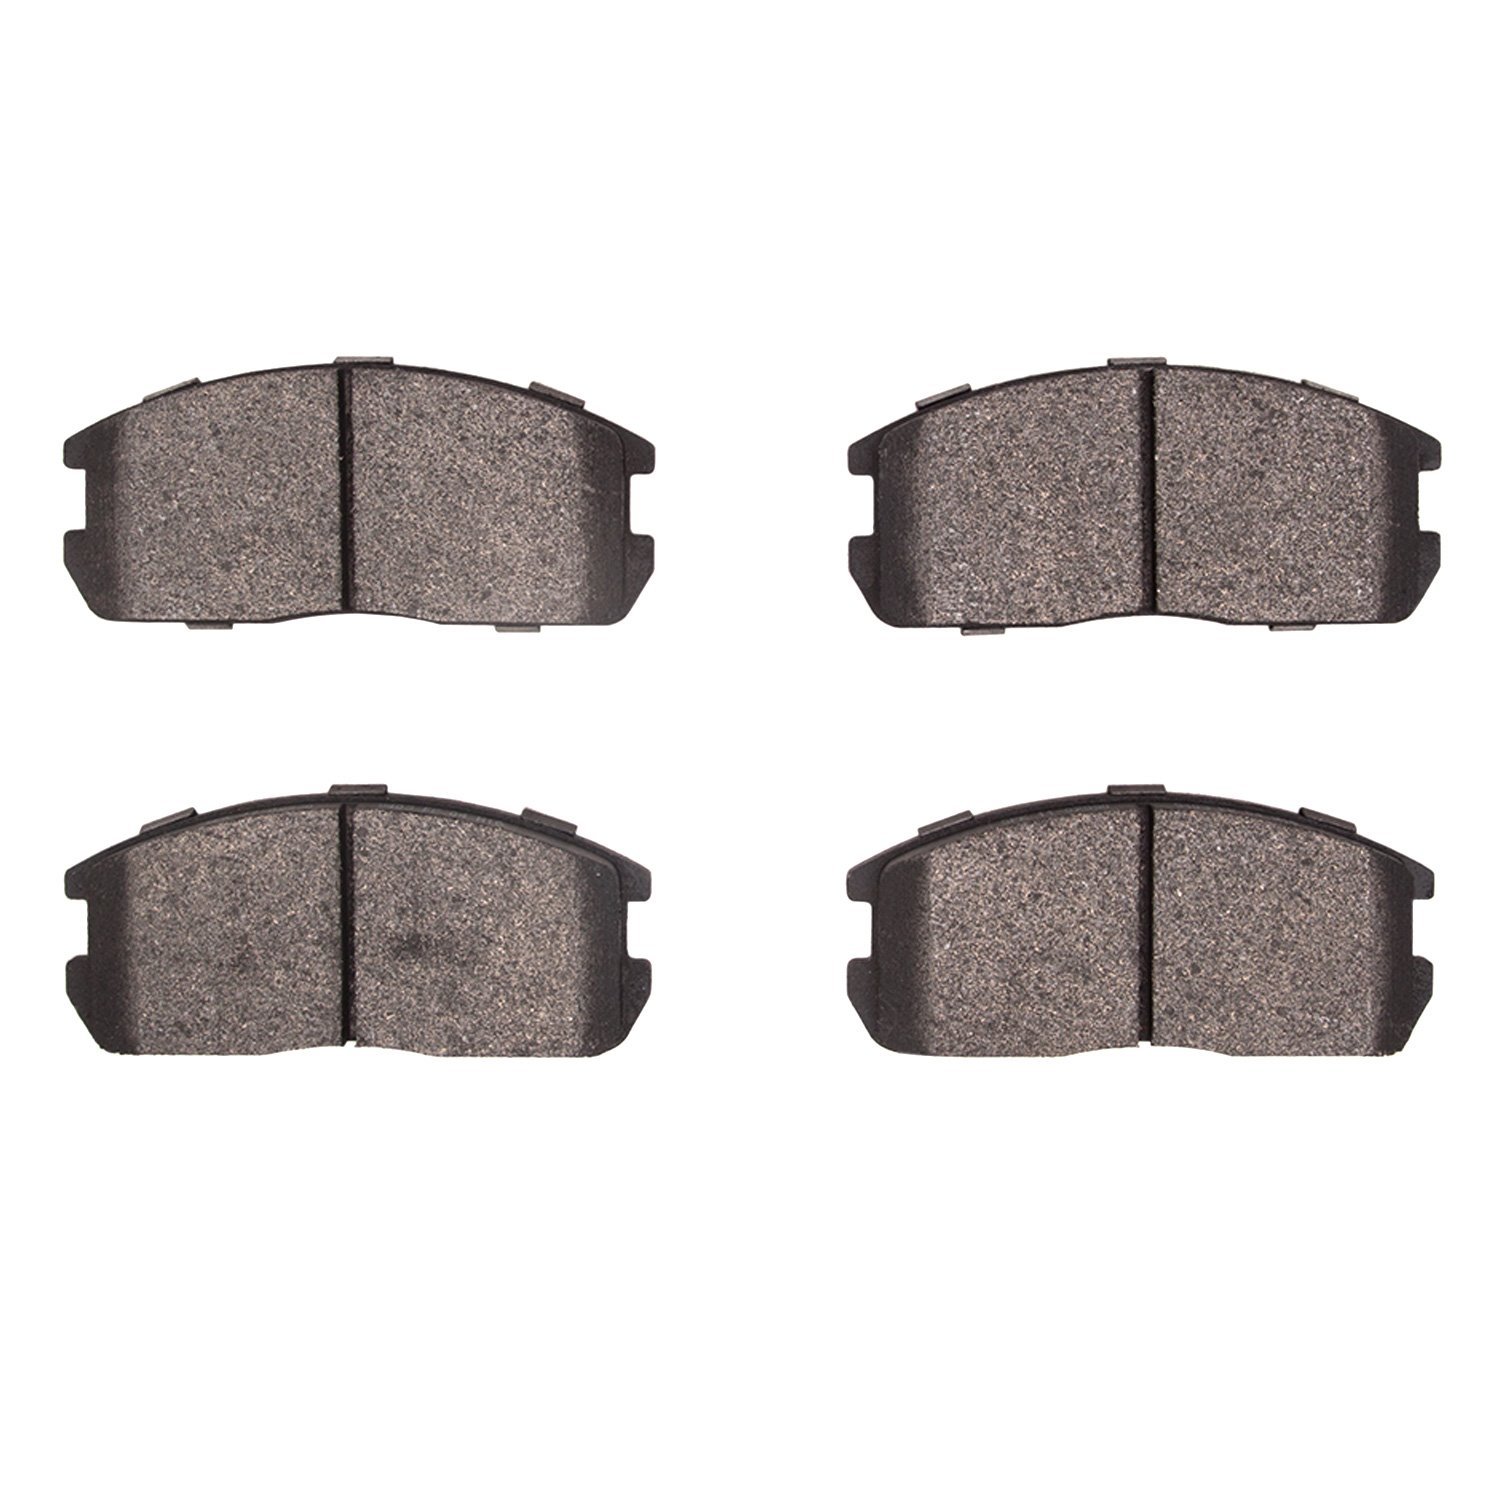 Semi-Metallic Brake Pads, 1985-1990 Fits Multiple Makes/Models, Position: Front